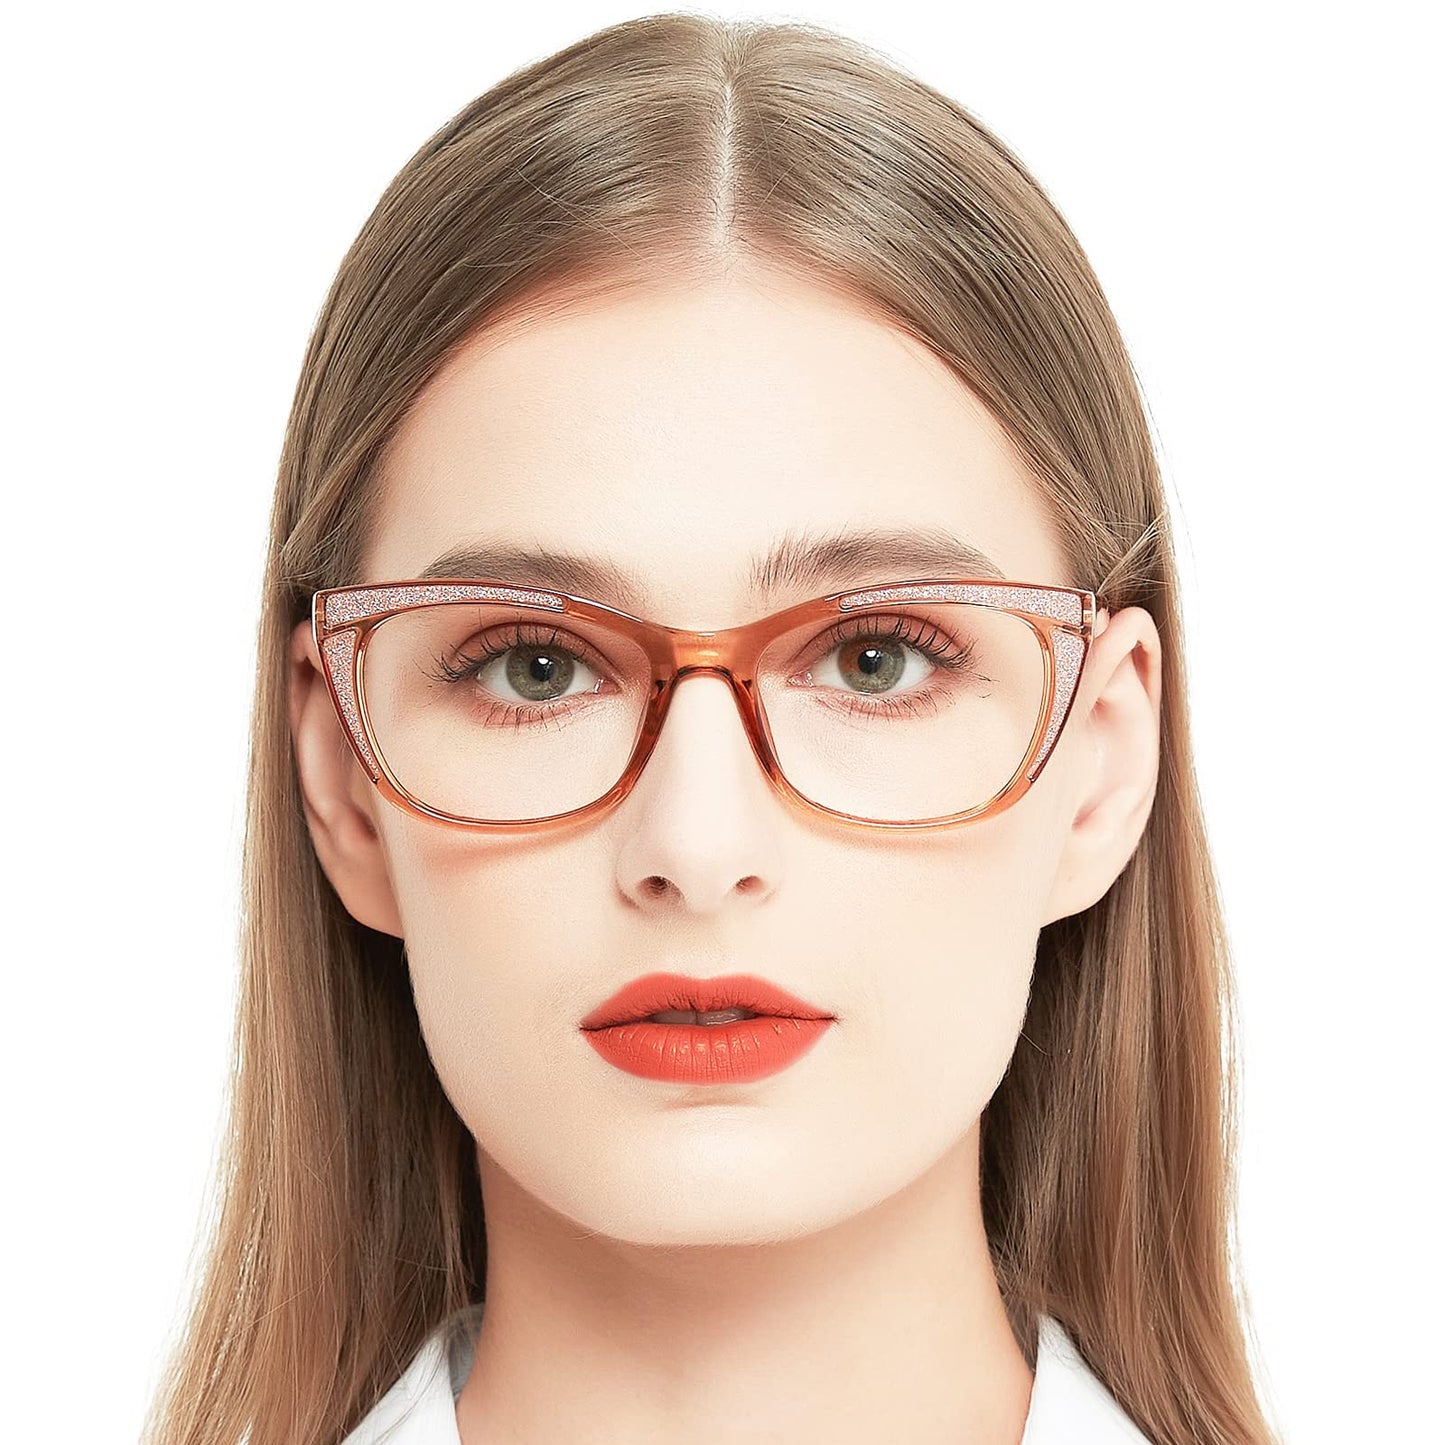 OCCI CHIARI Large Stylish Reading Glasses for Women Cateye Oversized Readers